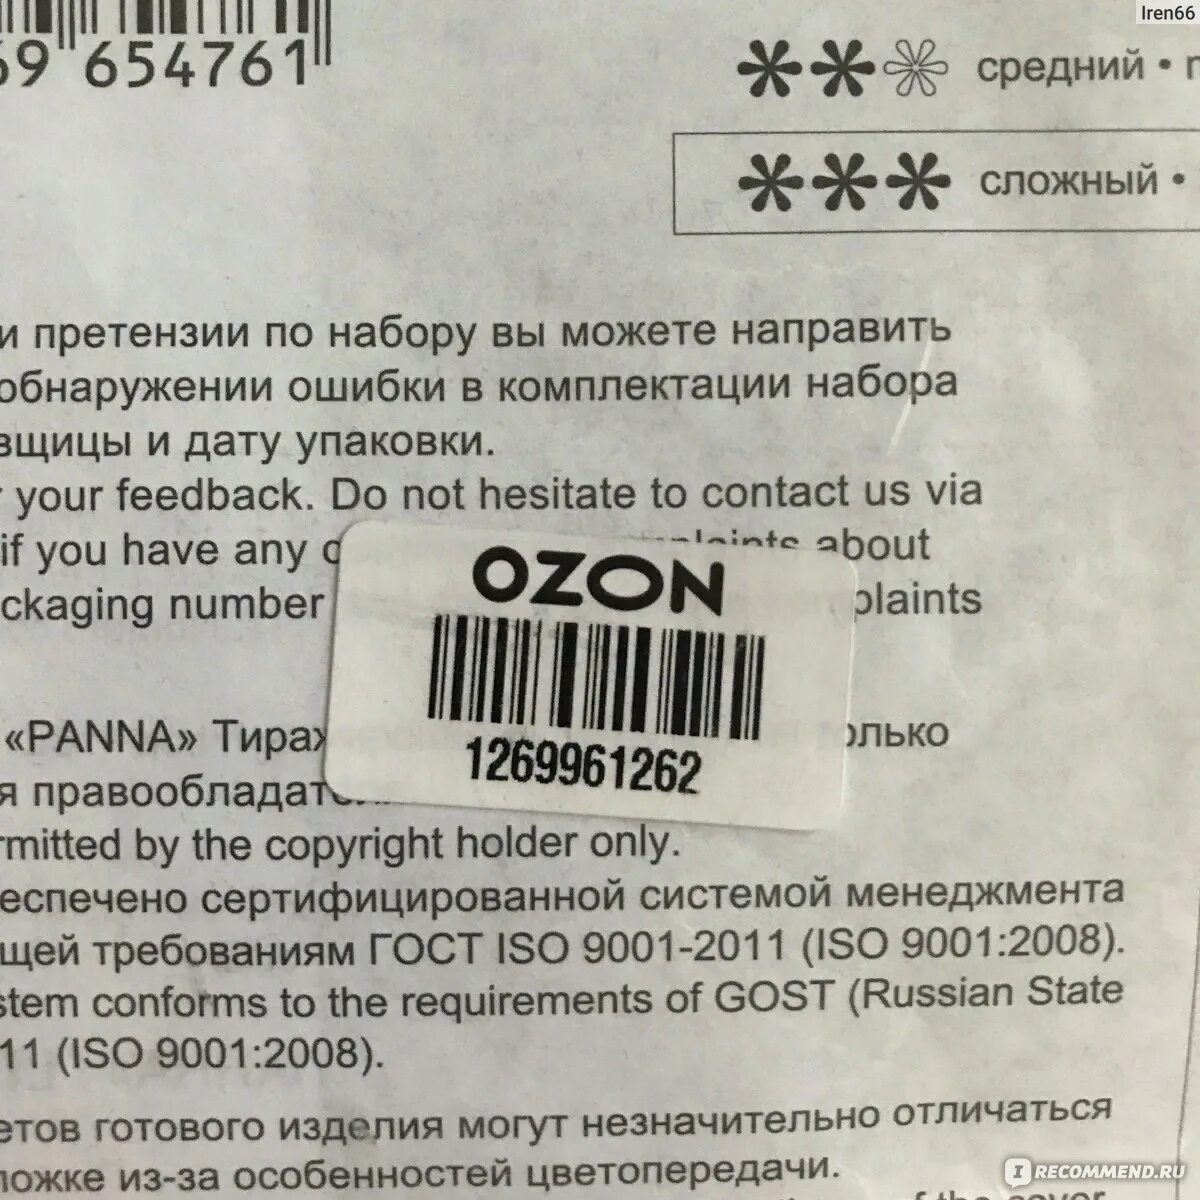 Этикетка на товар для озона. Штрихкод Озон требования. OZON этикетка штрих код. Требования к этикетке Озон. Штрих код озон для получения товара